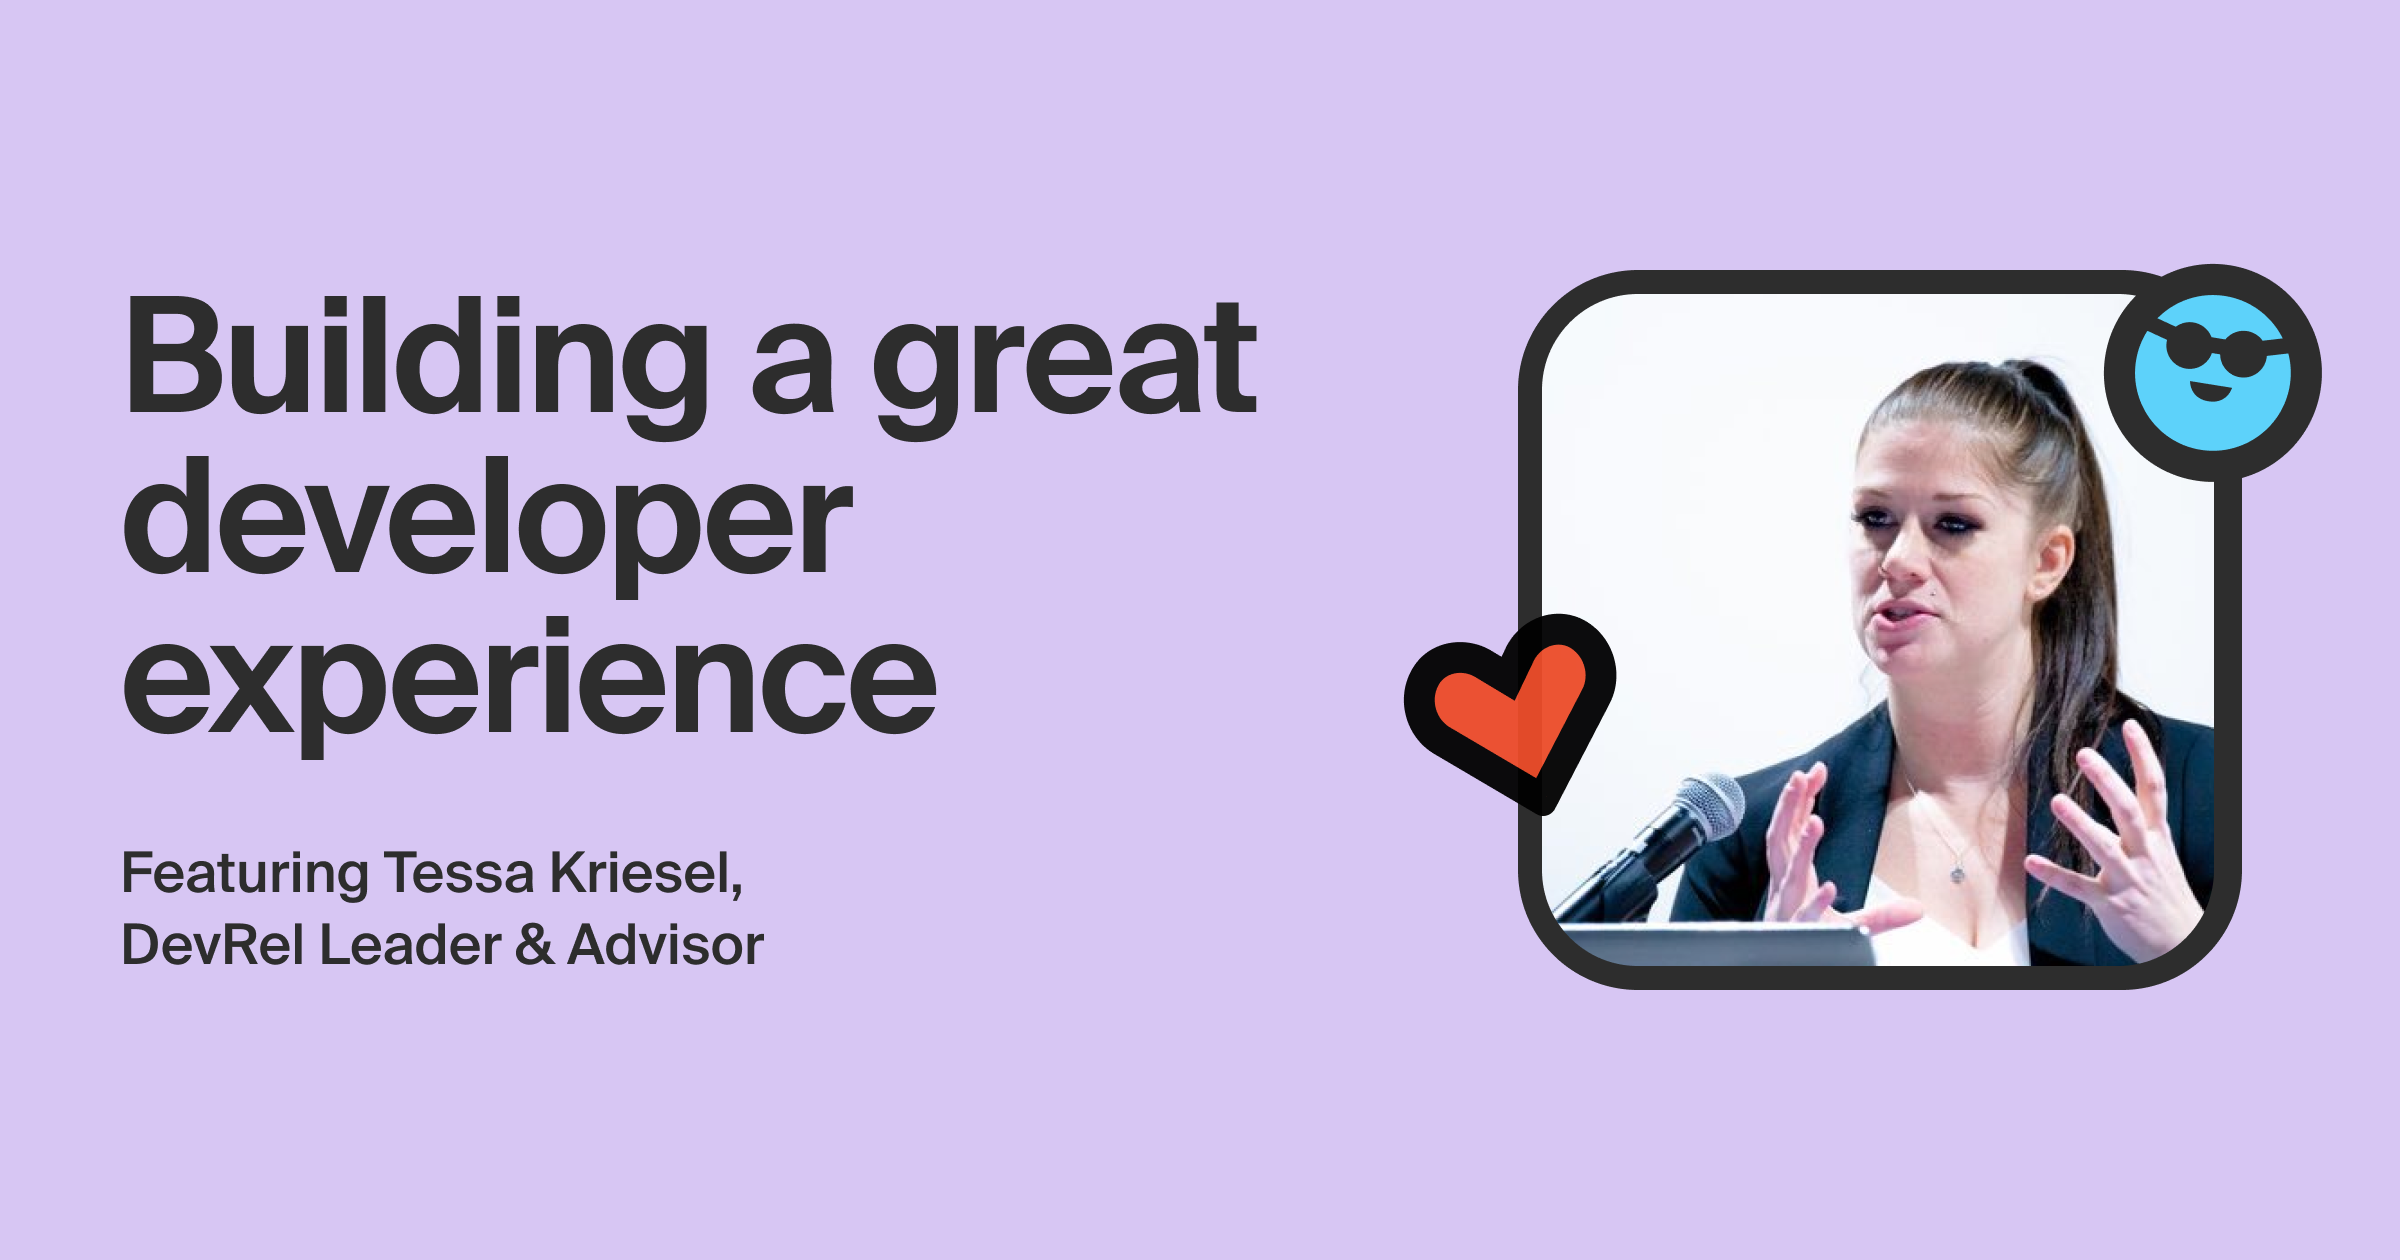 Building a great developer experience featuring Tessa Kriesel, DevRel Leader & Advisor